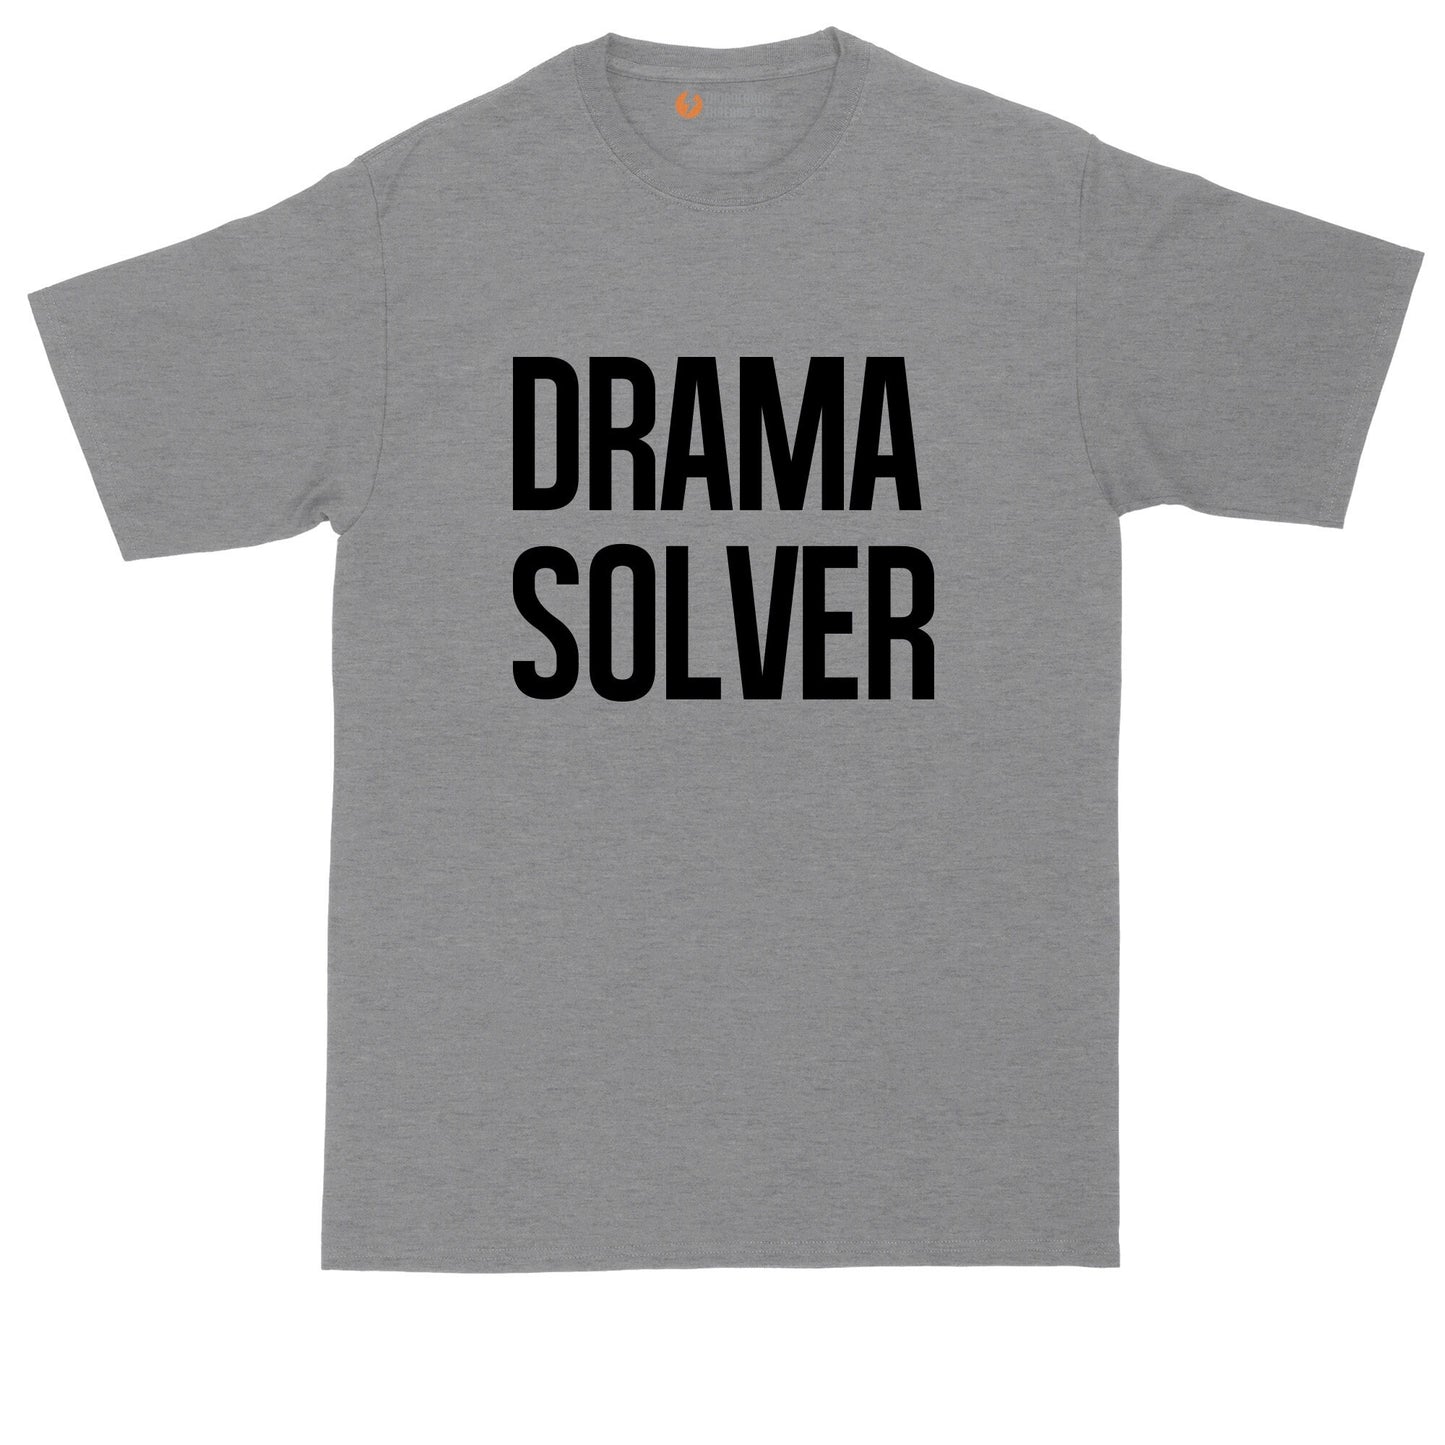 Drama Solver | Big and Tall Mens T-Shirt | Funny T-Shirt | Graphic T-Shirt